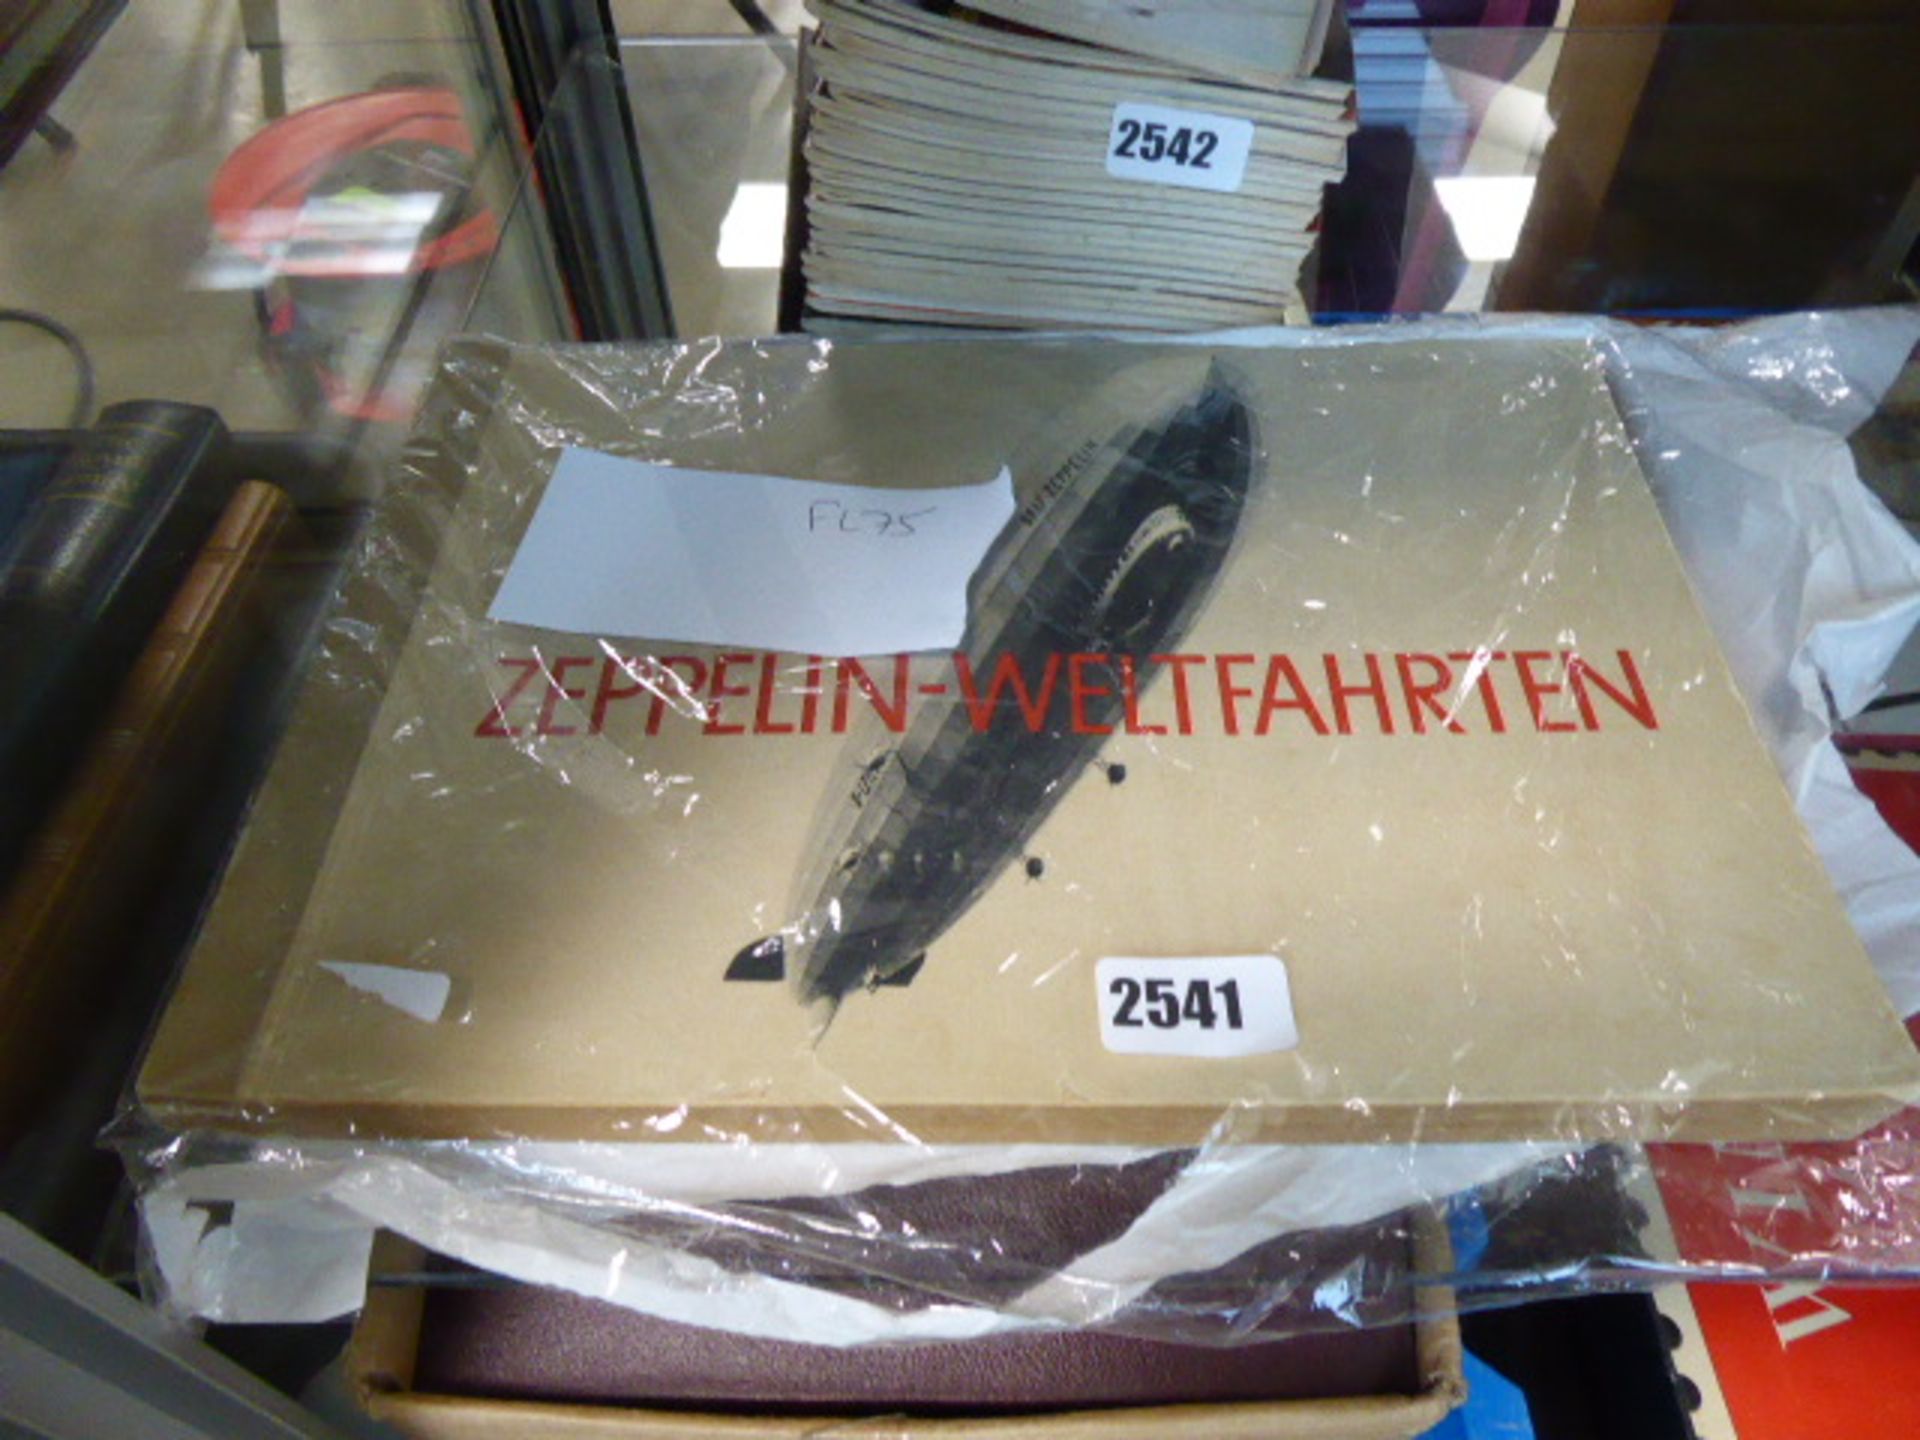 Zeppelin Weltfahrten collector's card album